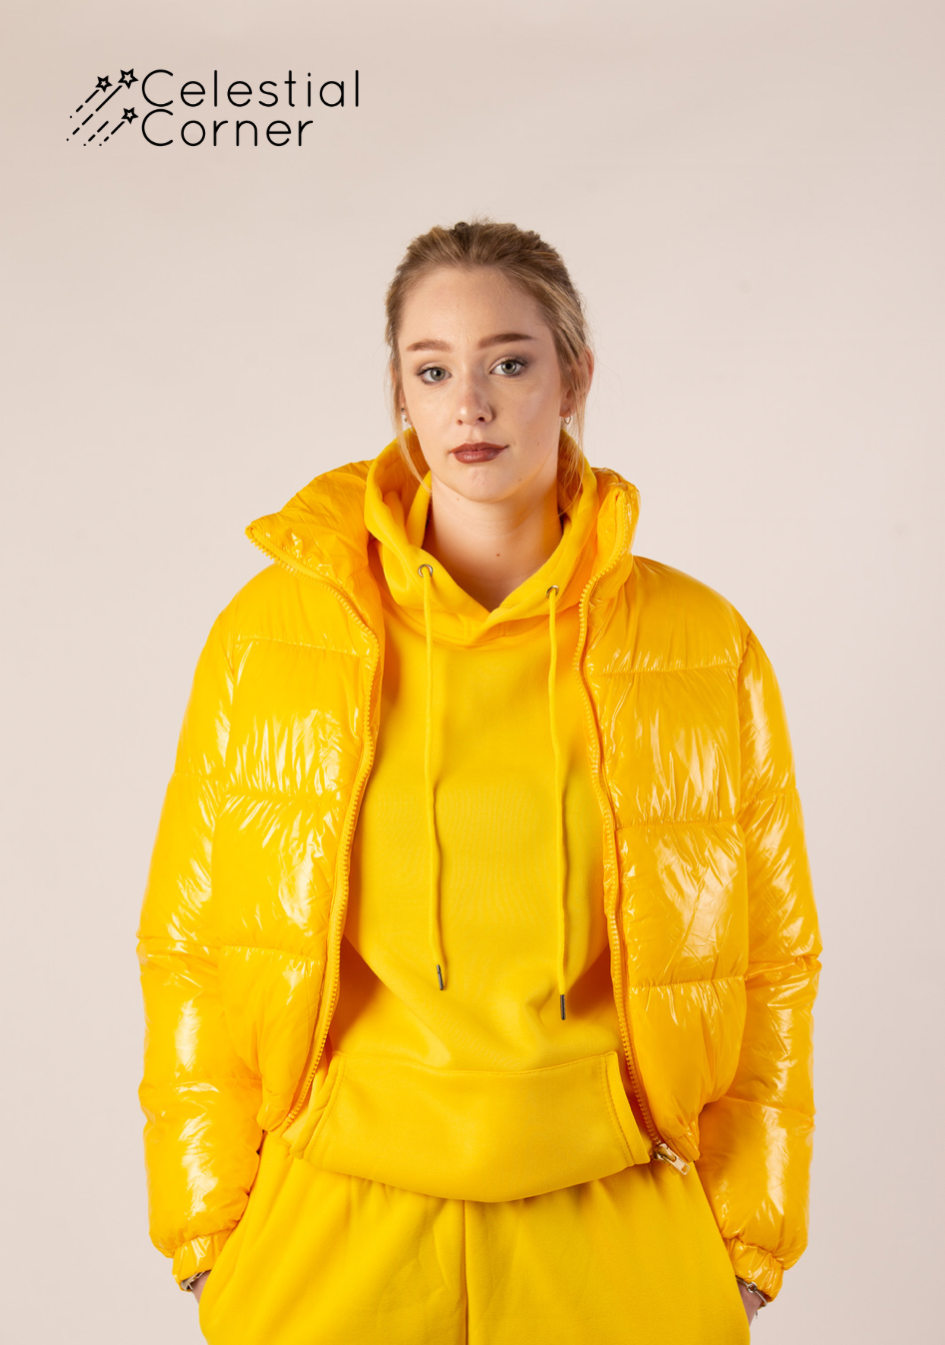 Neon Yellow Puffer Jacket